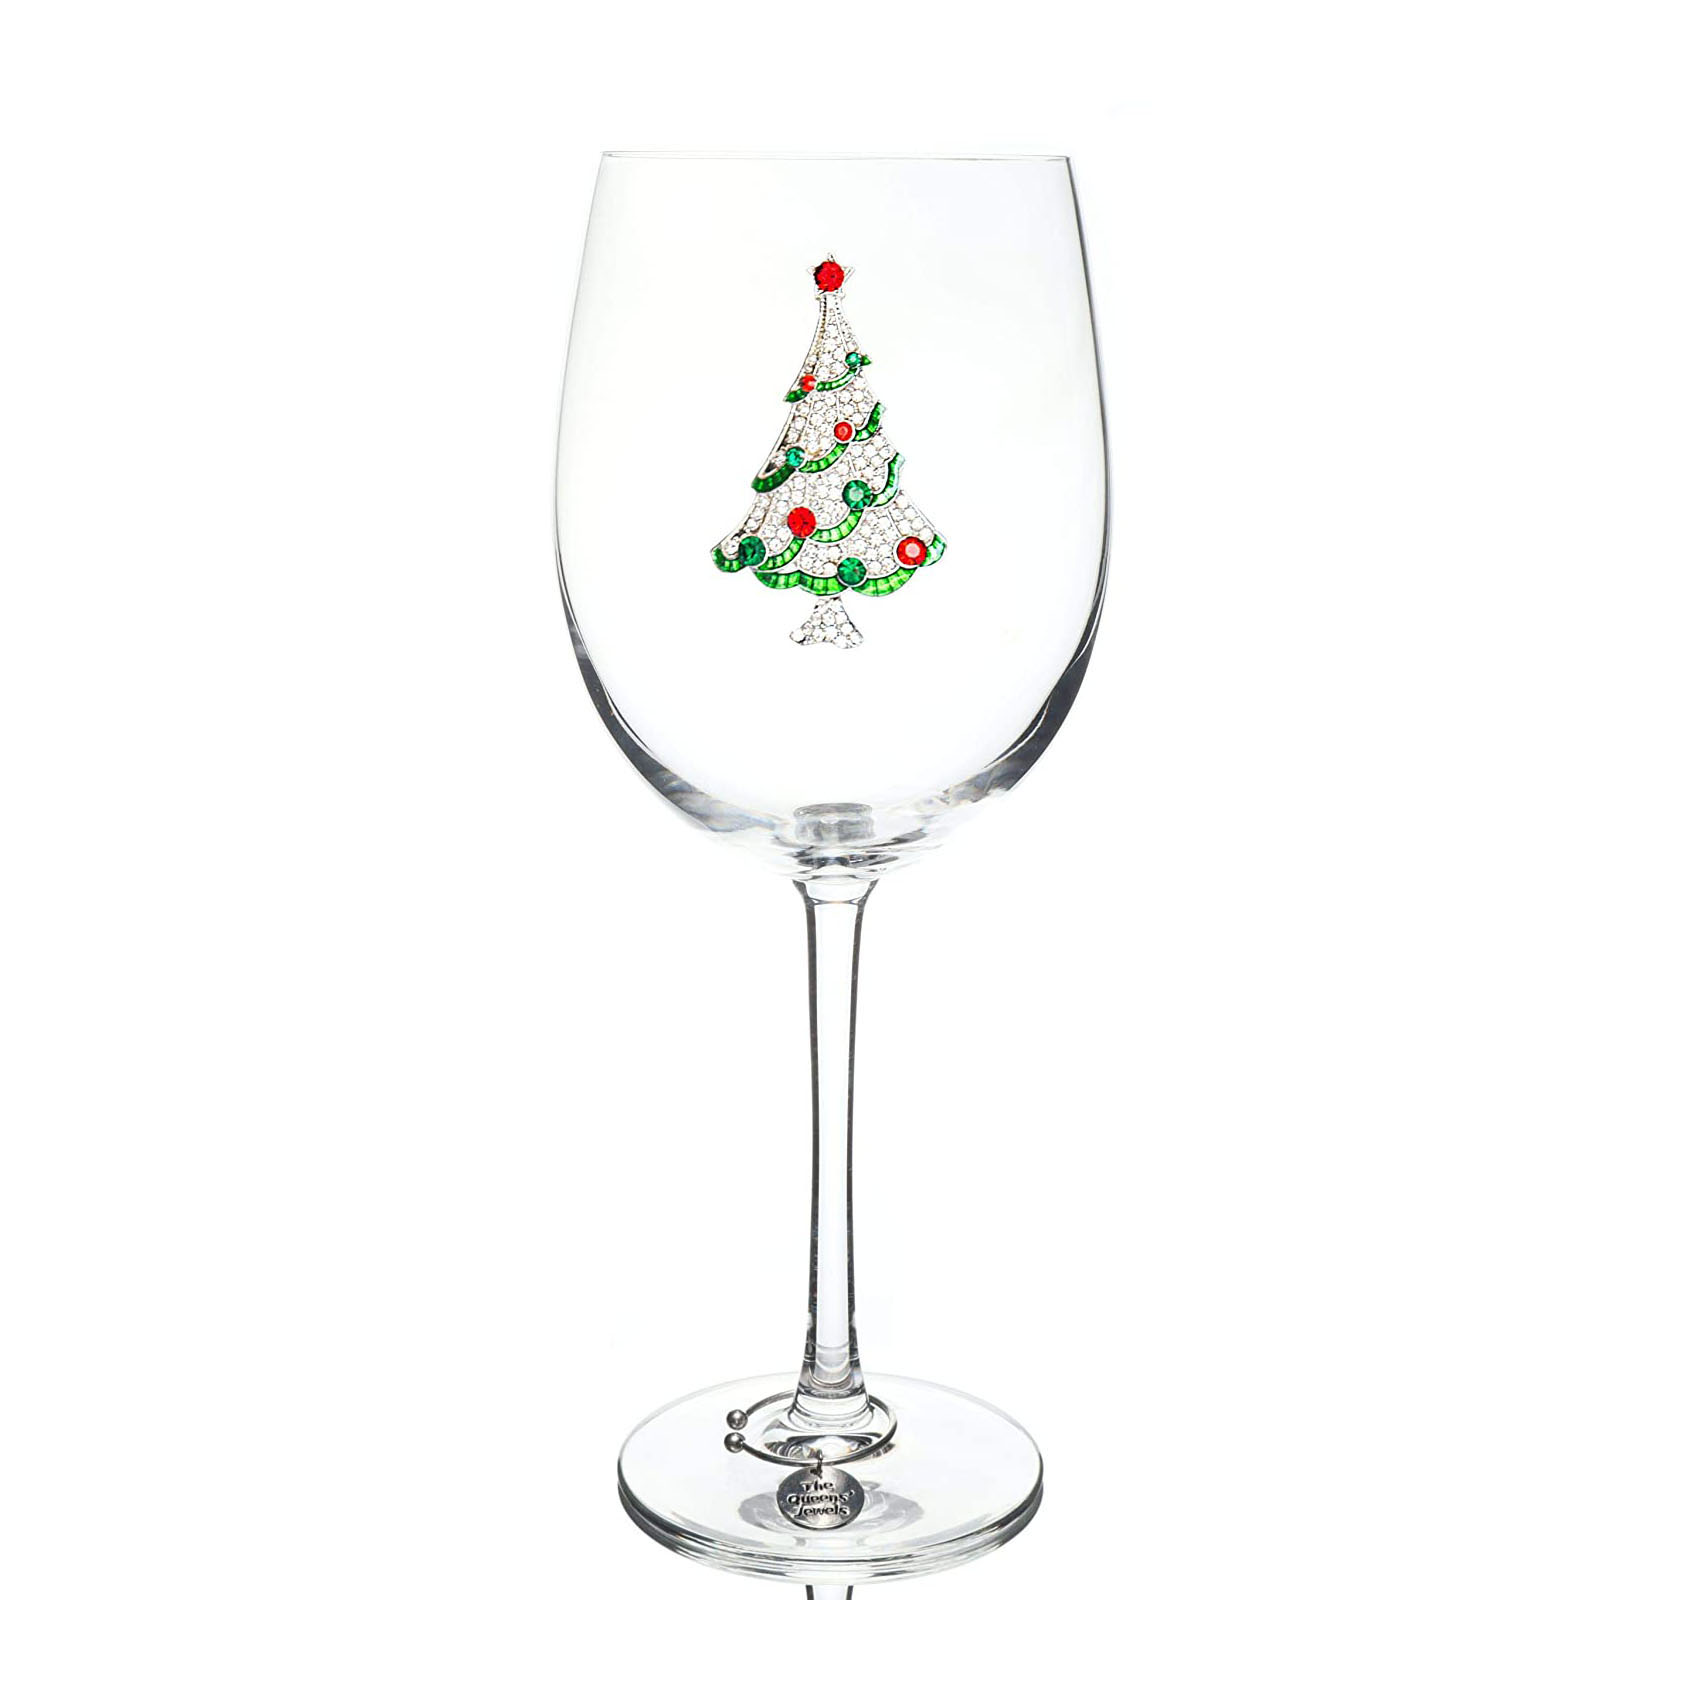 https://www.pnwwinelife.com/wp-content/uploads/2020/12/Christmas-tree-wine-glass-1.jpg